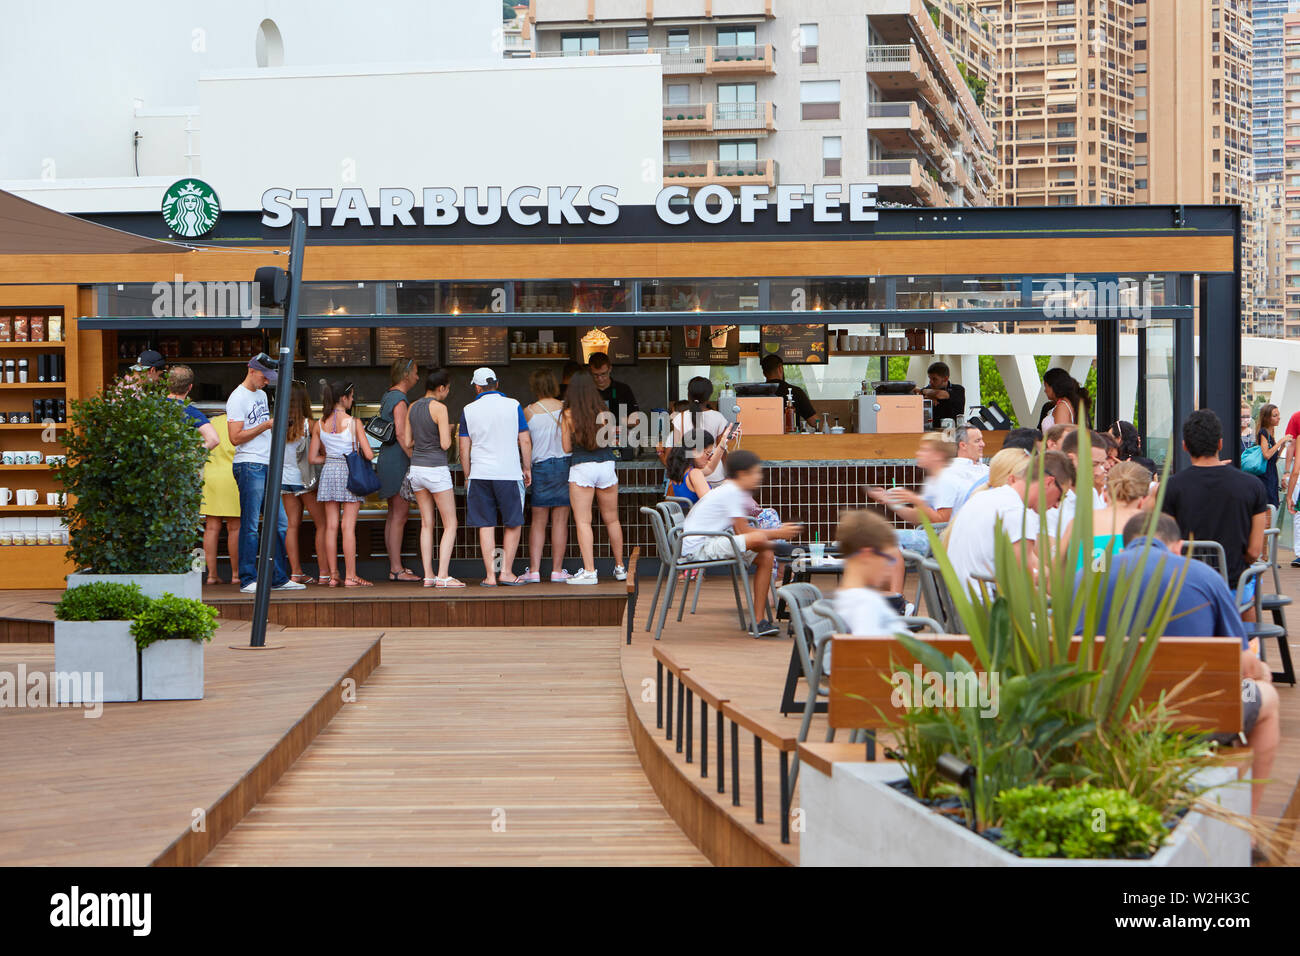 MONTE CARLO, MONACO - AUGUST 19, 2016: Starbucks Coffee cafe terrace with people in summer in Monte Carlo, Monaco. Stock Photo